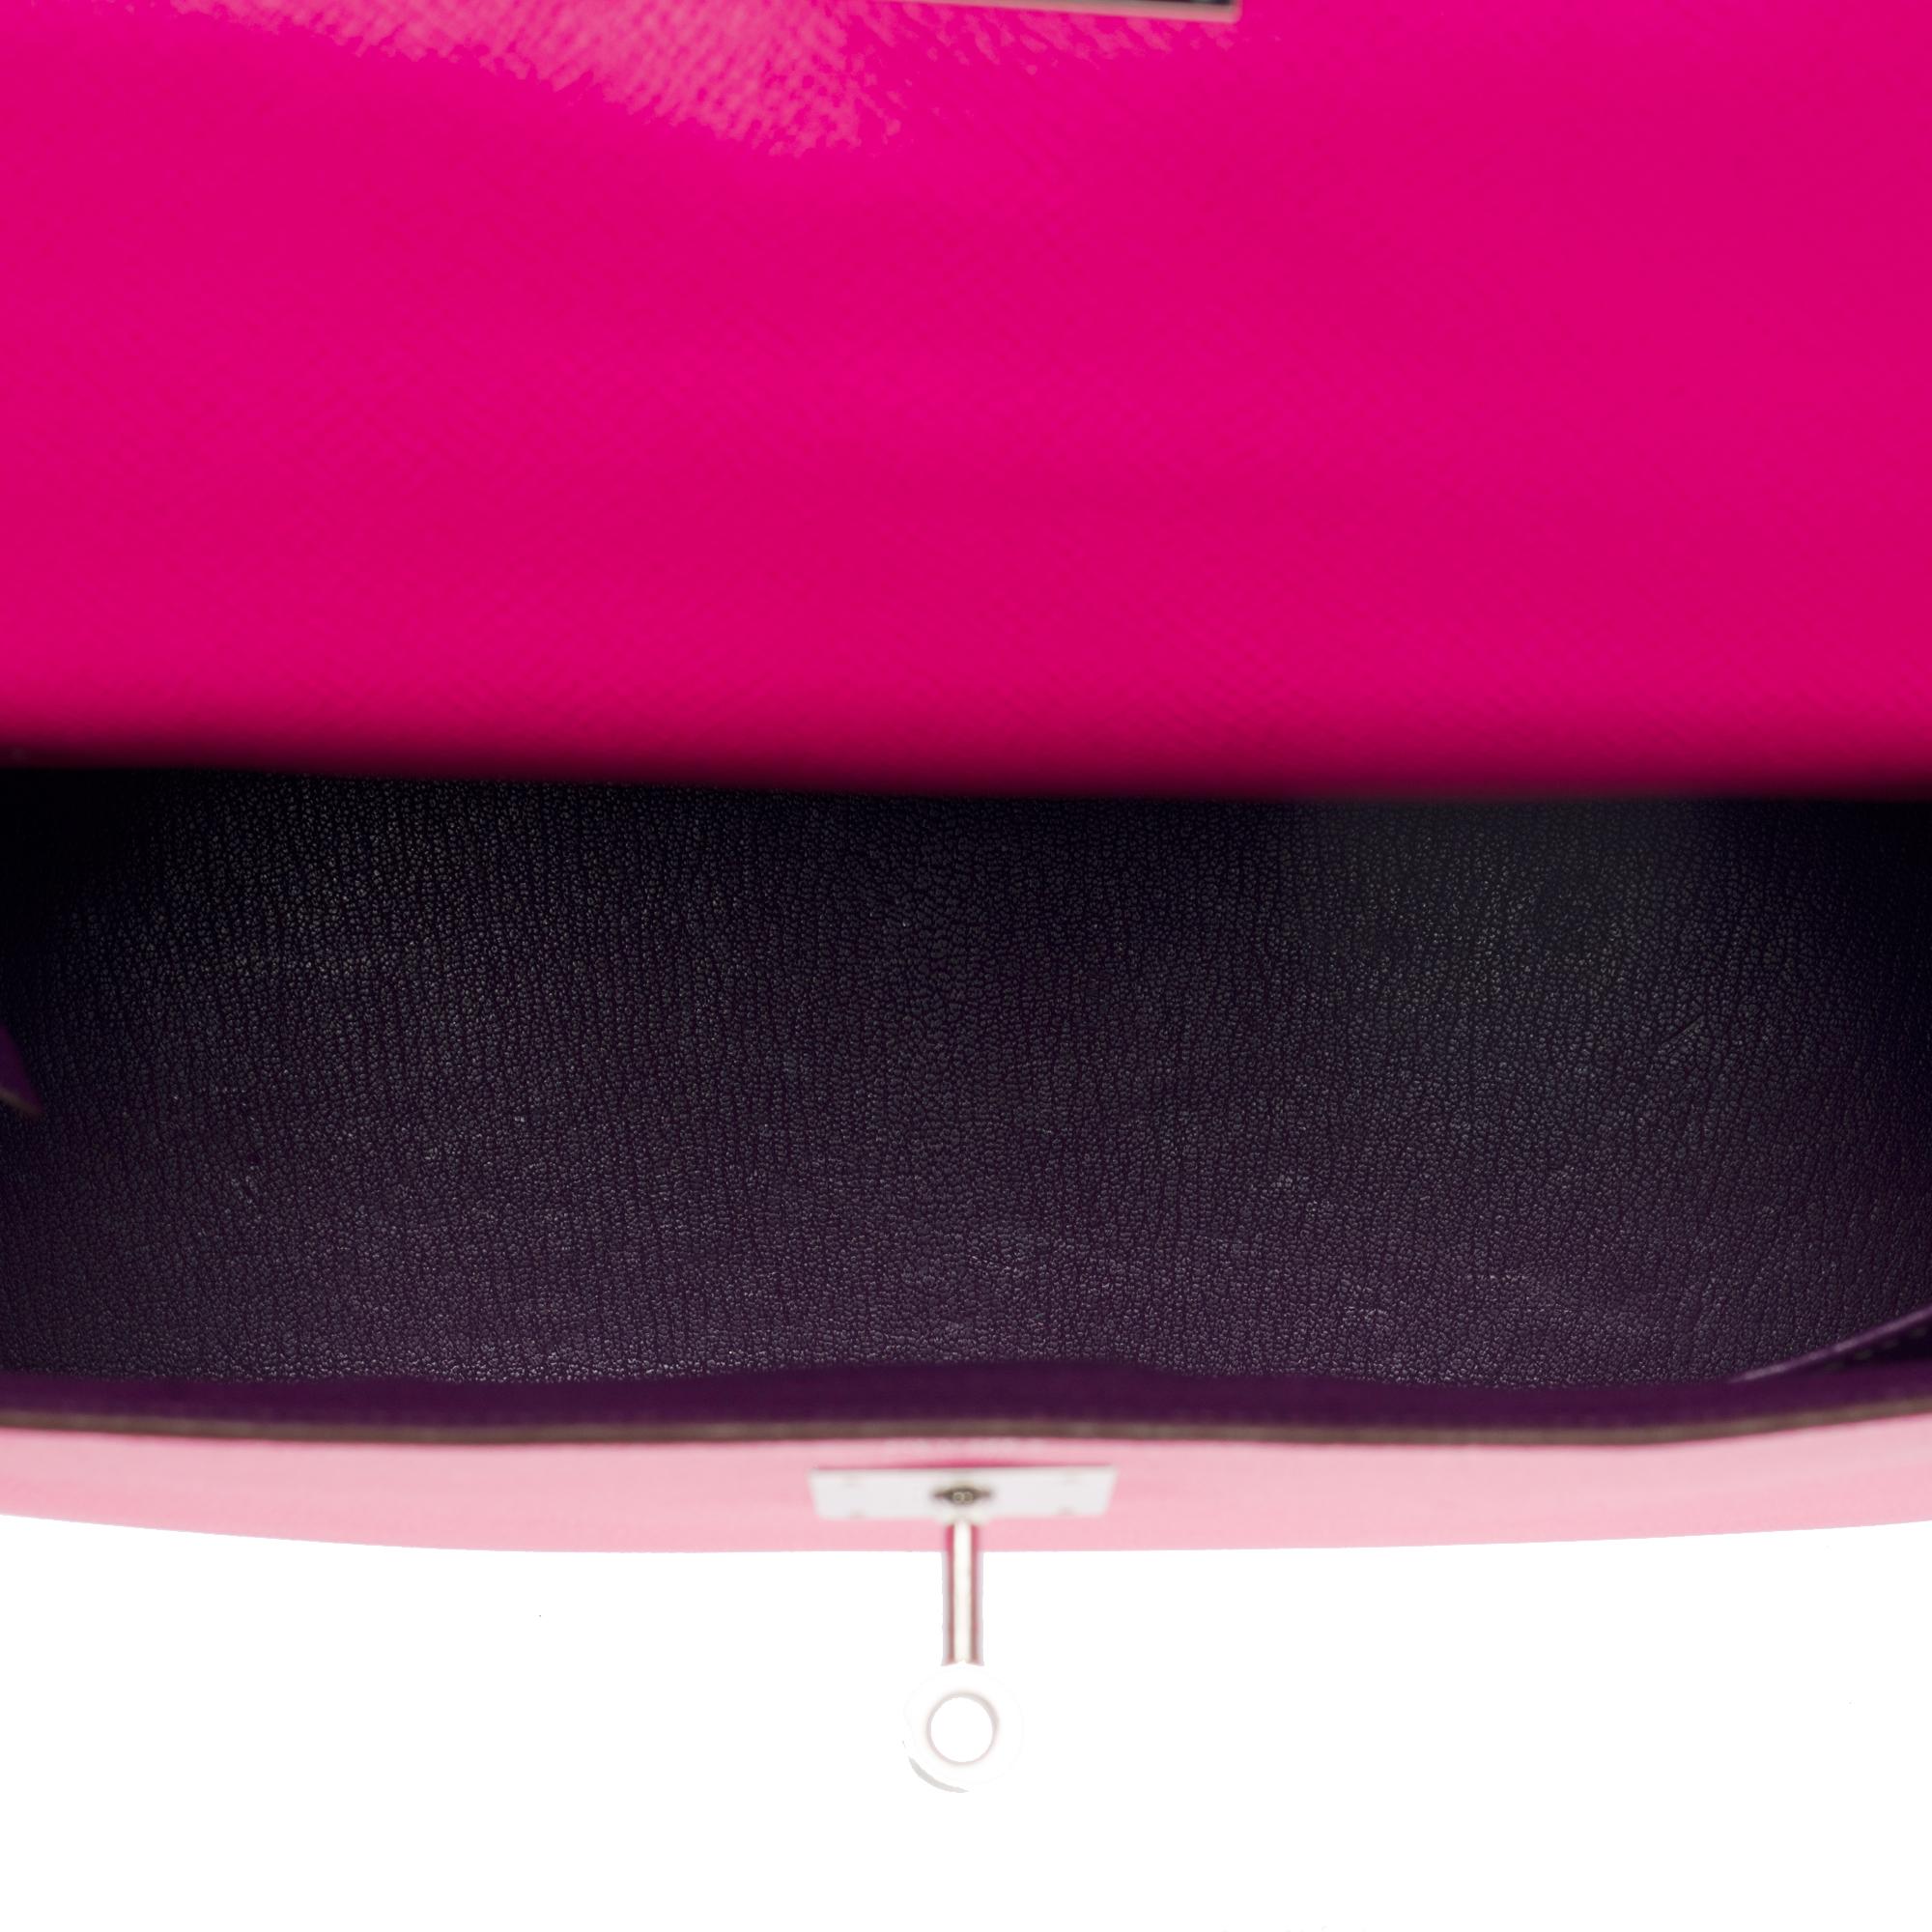 Hermès Kelly 32 sellier handbag strap (HSS) in Pink & purple Epsom leather, SHW 3